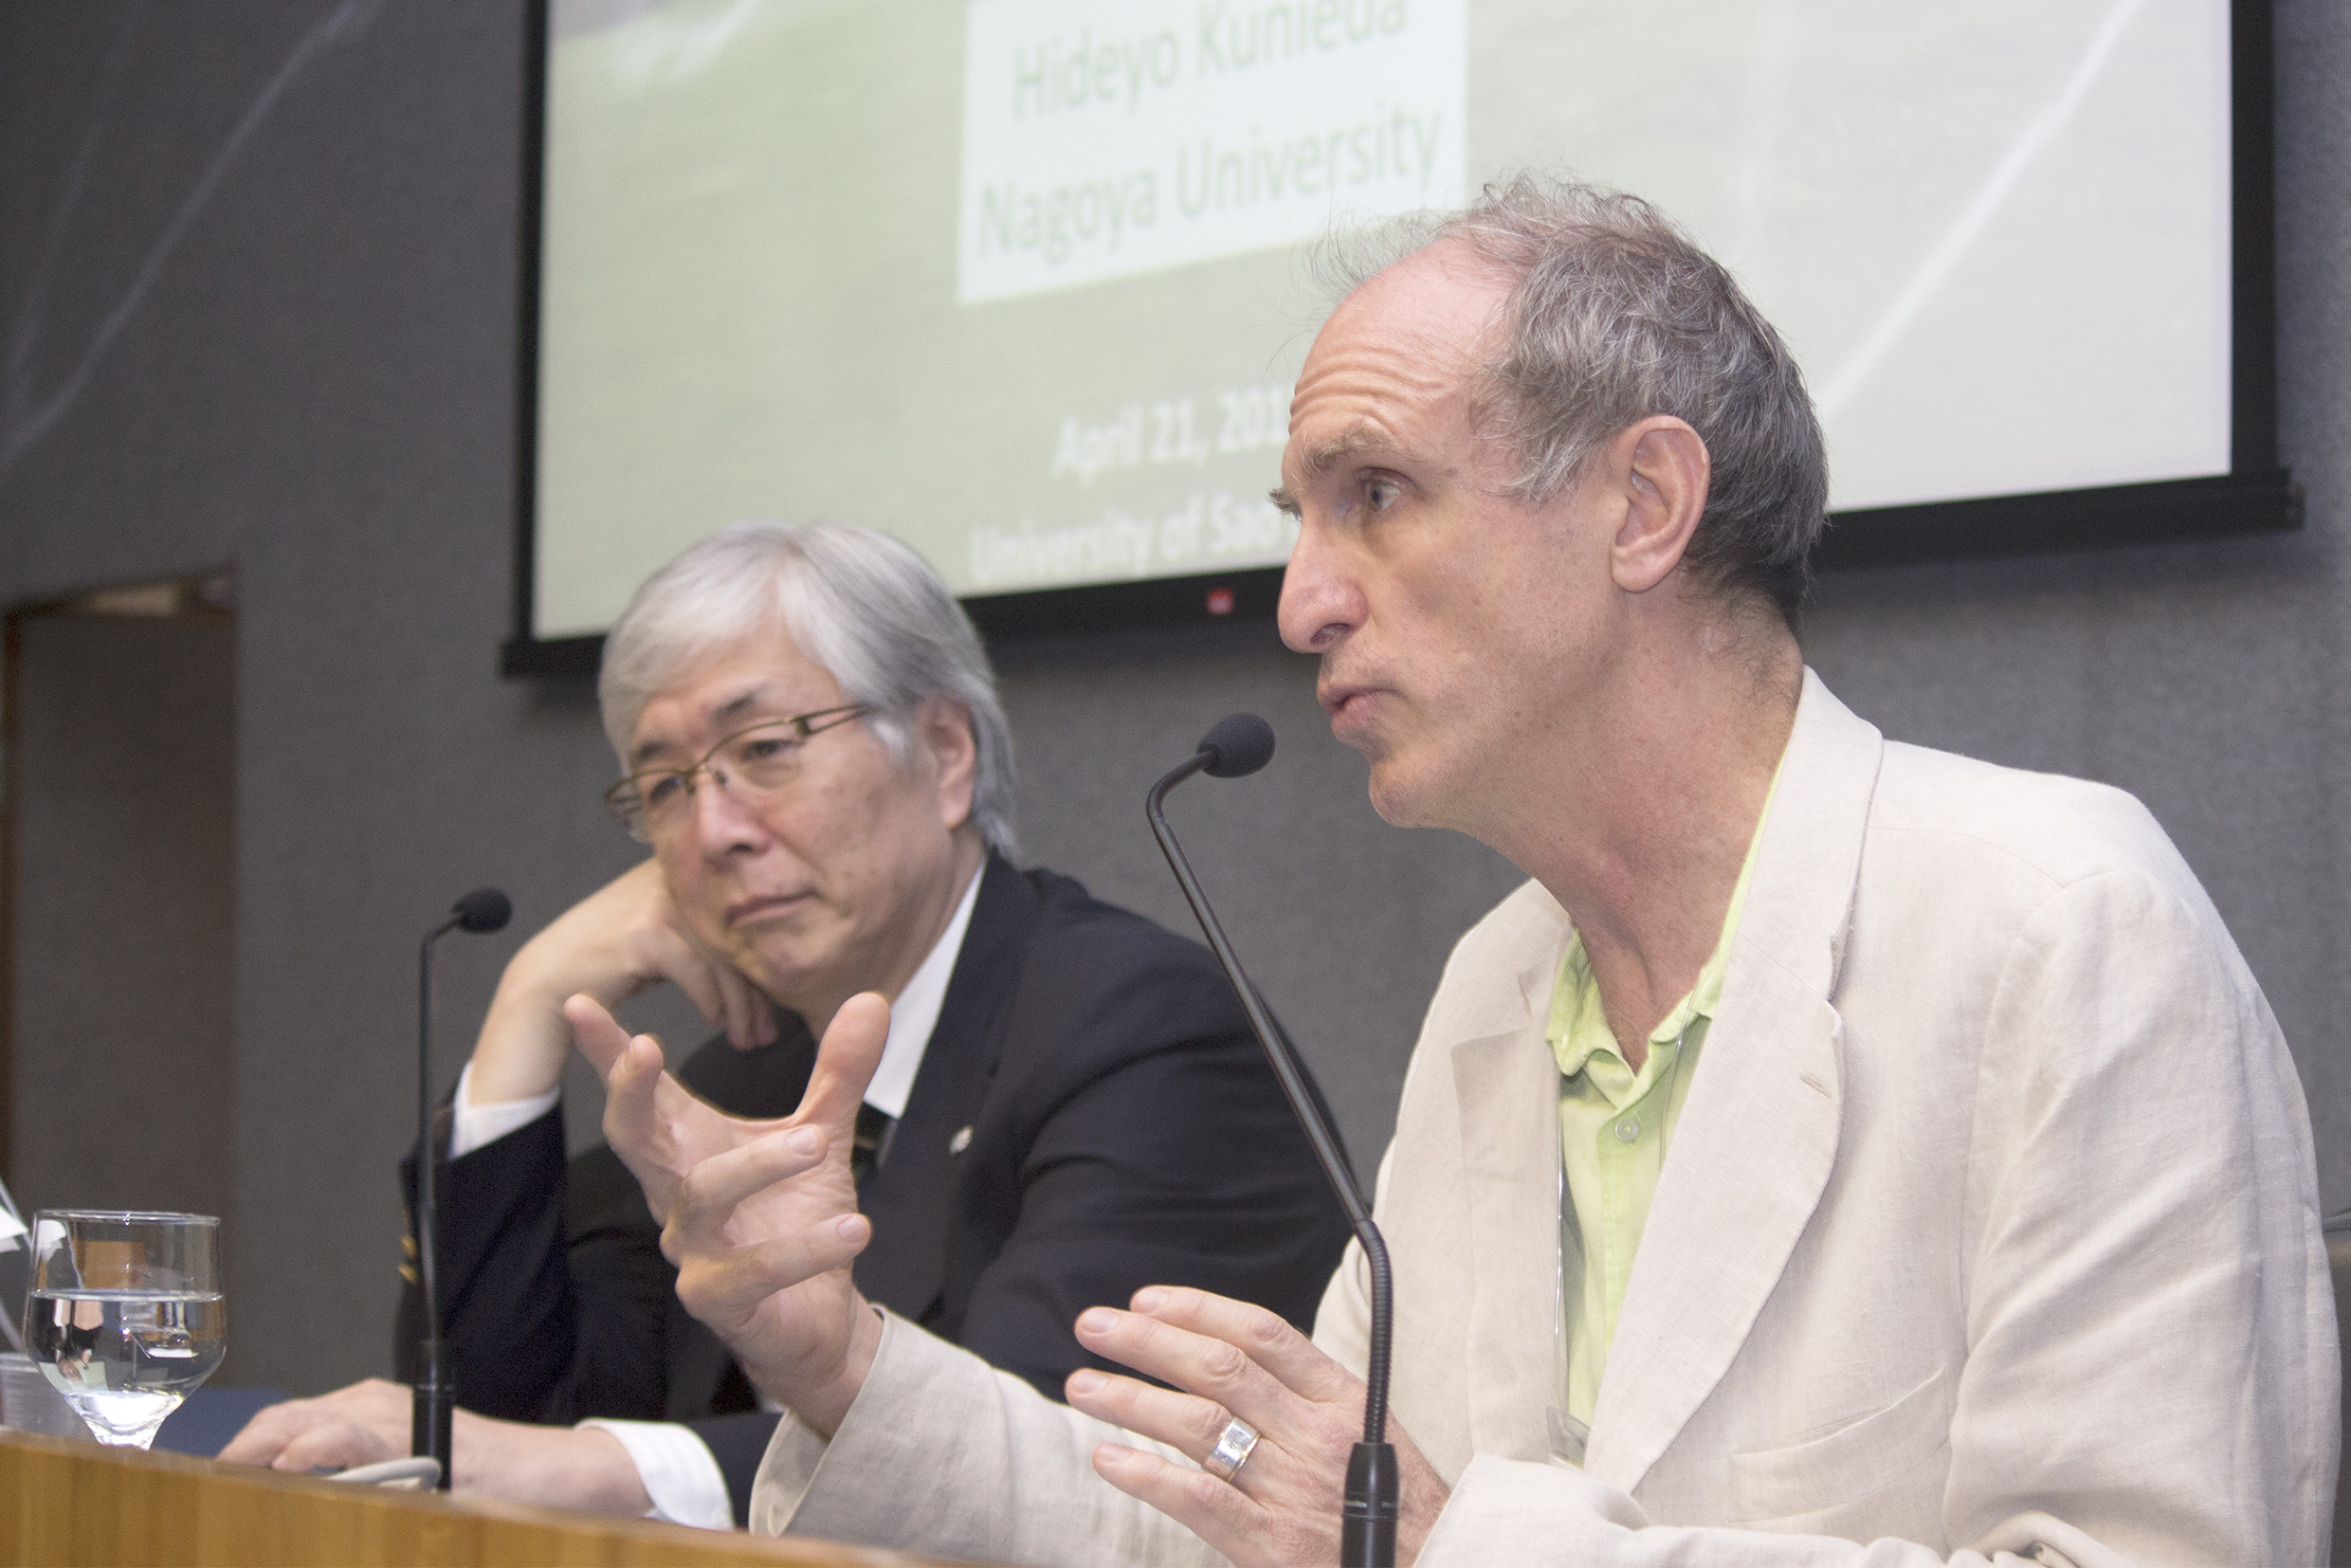 Martin Grossmann introducing Hideyo Kunieda's talk - April 21, 2015